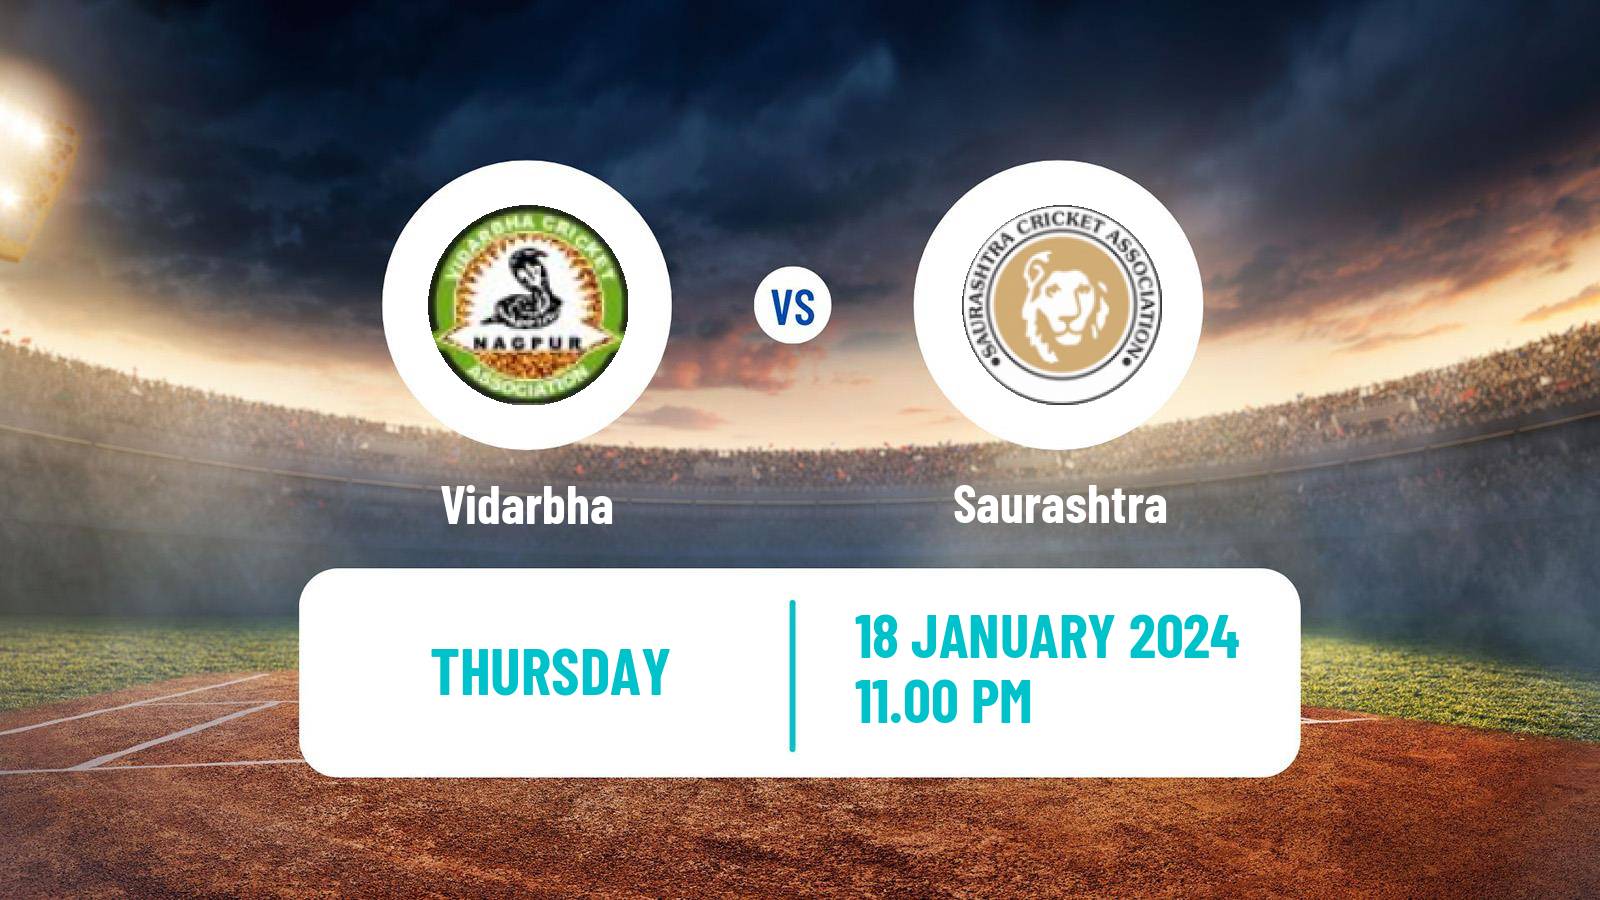 Cricket Ranji Trophy Vidarbha - Saurashtra